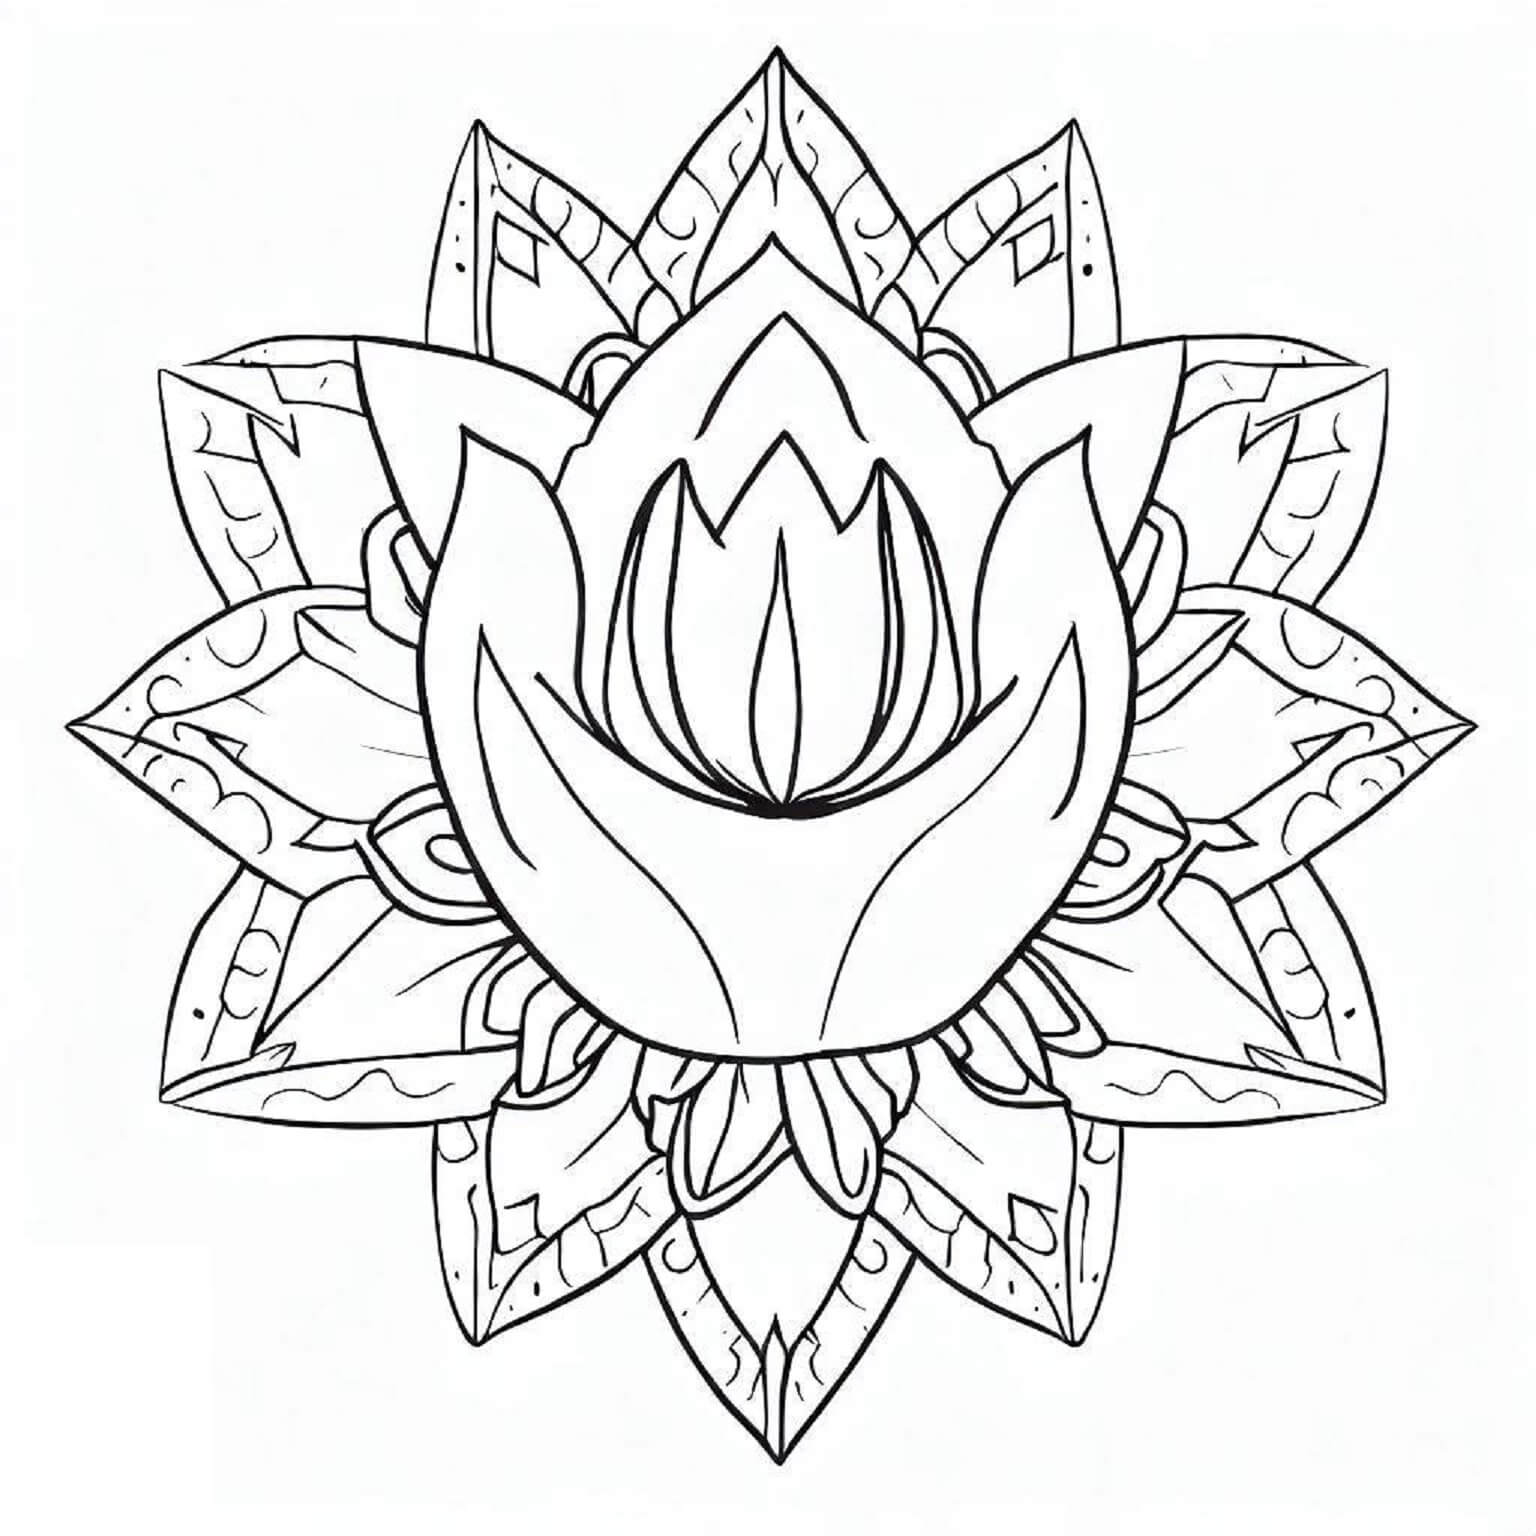 Mandala Tulip Coloring Page - Sheet 8 Mandalas